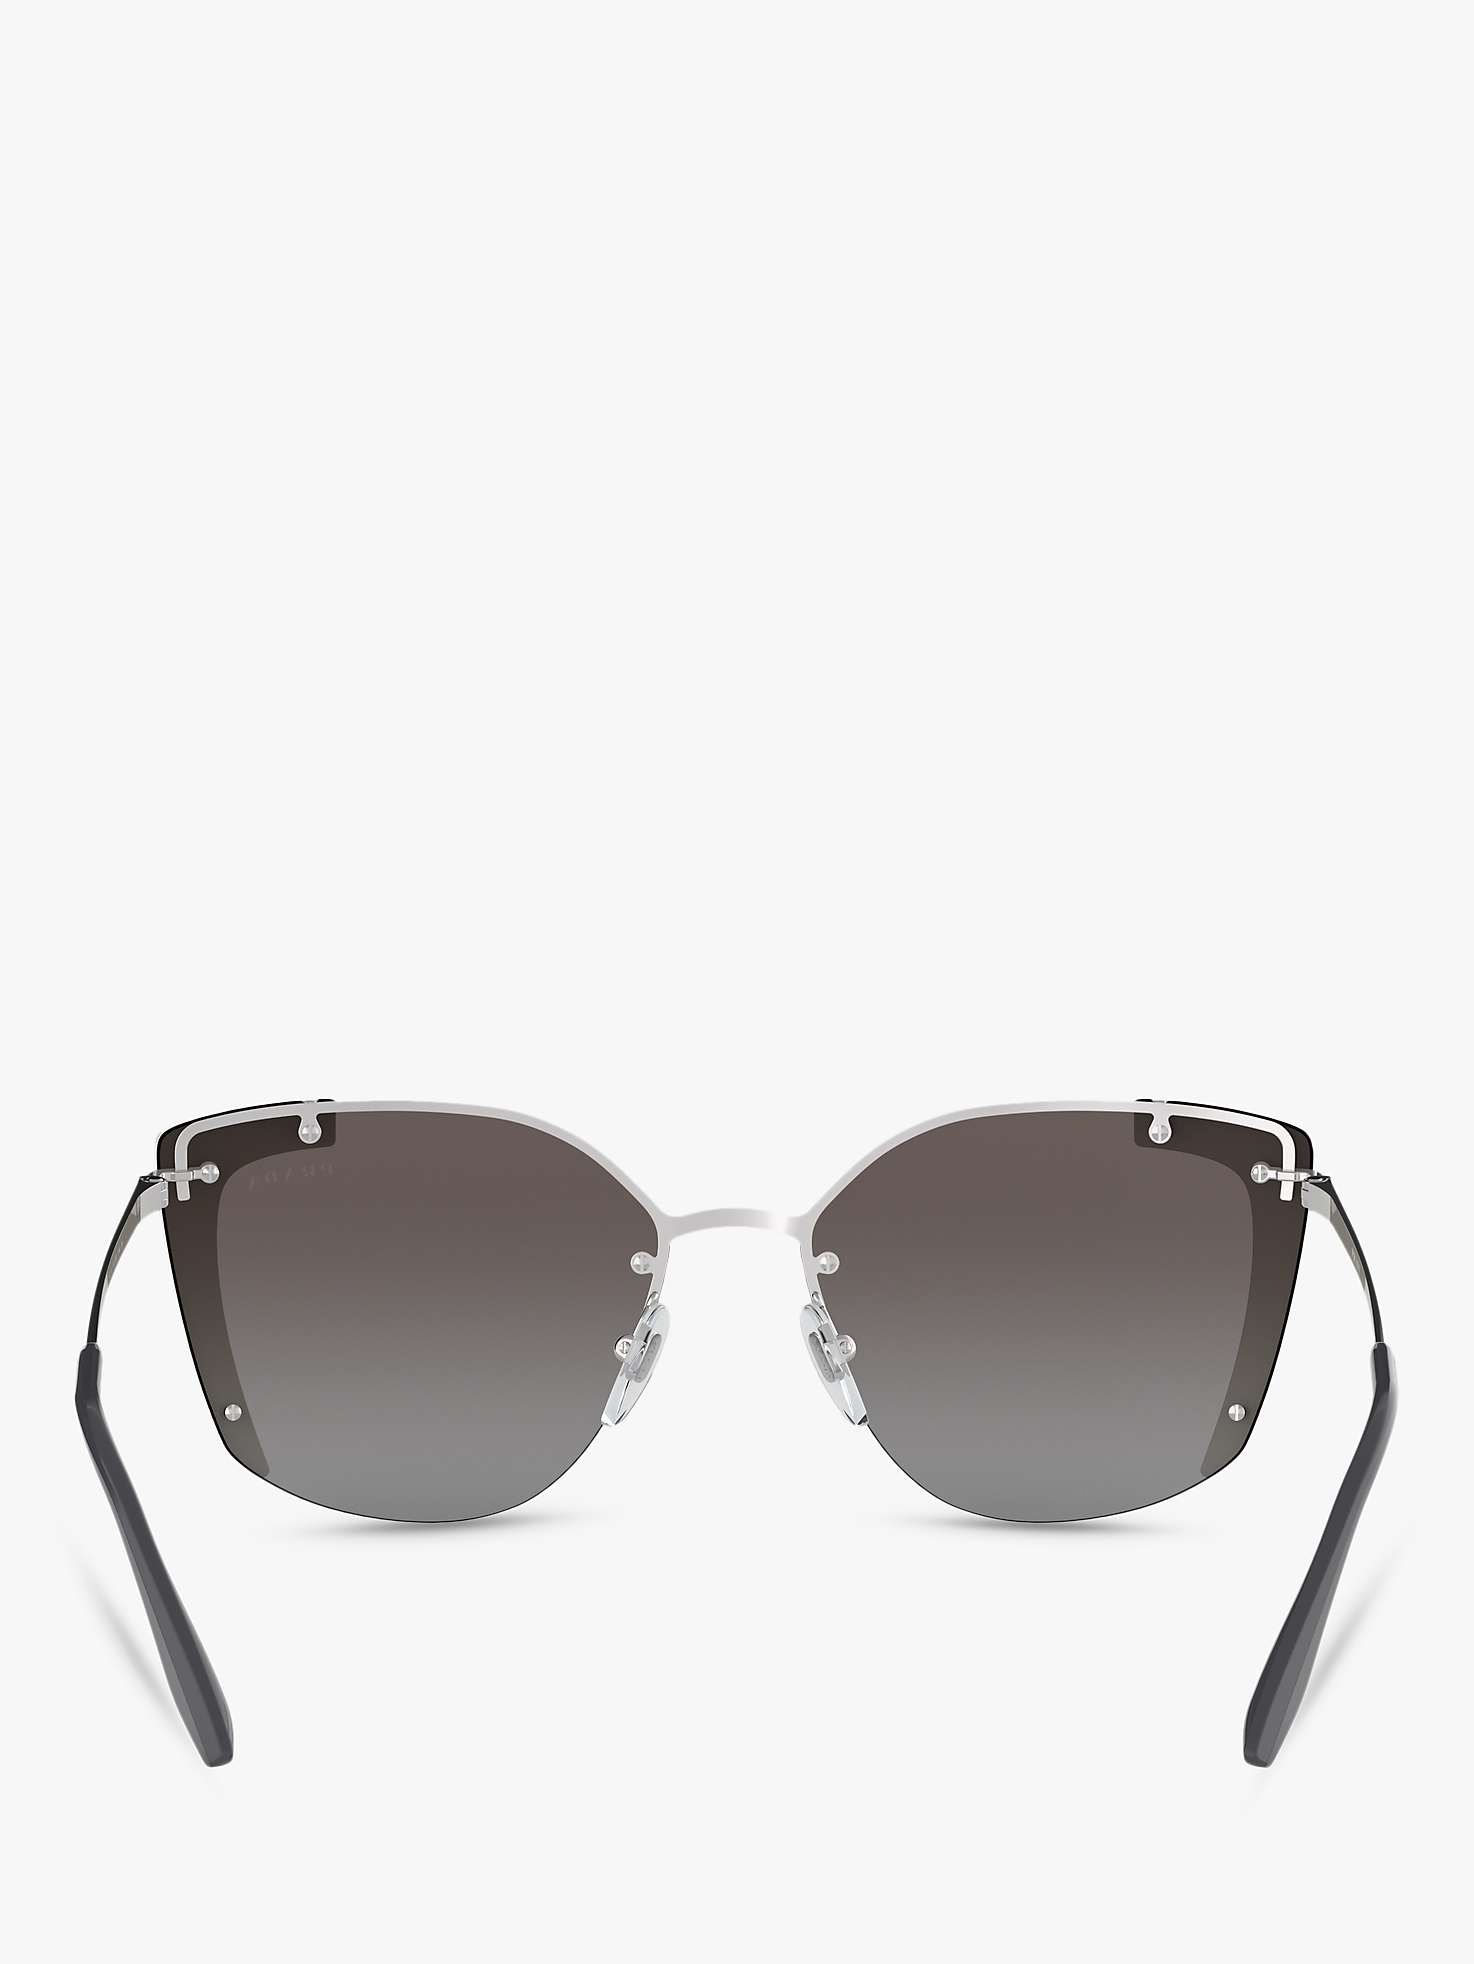 Buy Prada PR 59VS Women's Square Sunglasses, Silver/Mirror Grey Online at johnlewis.com